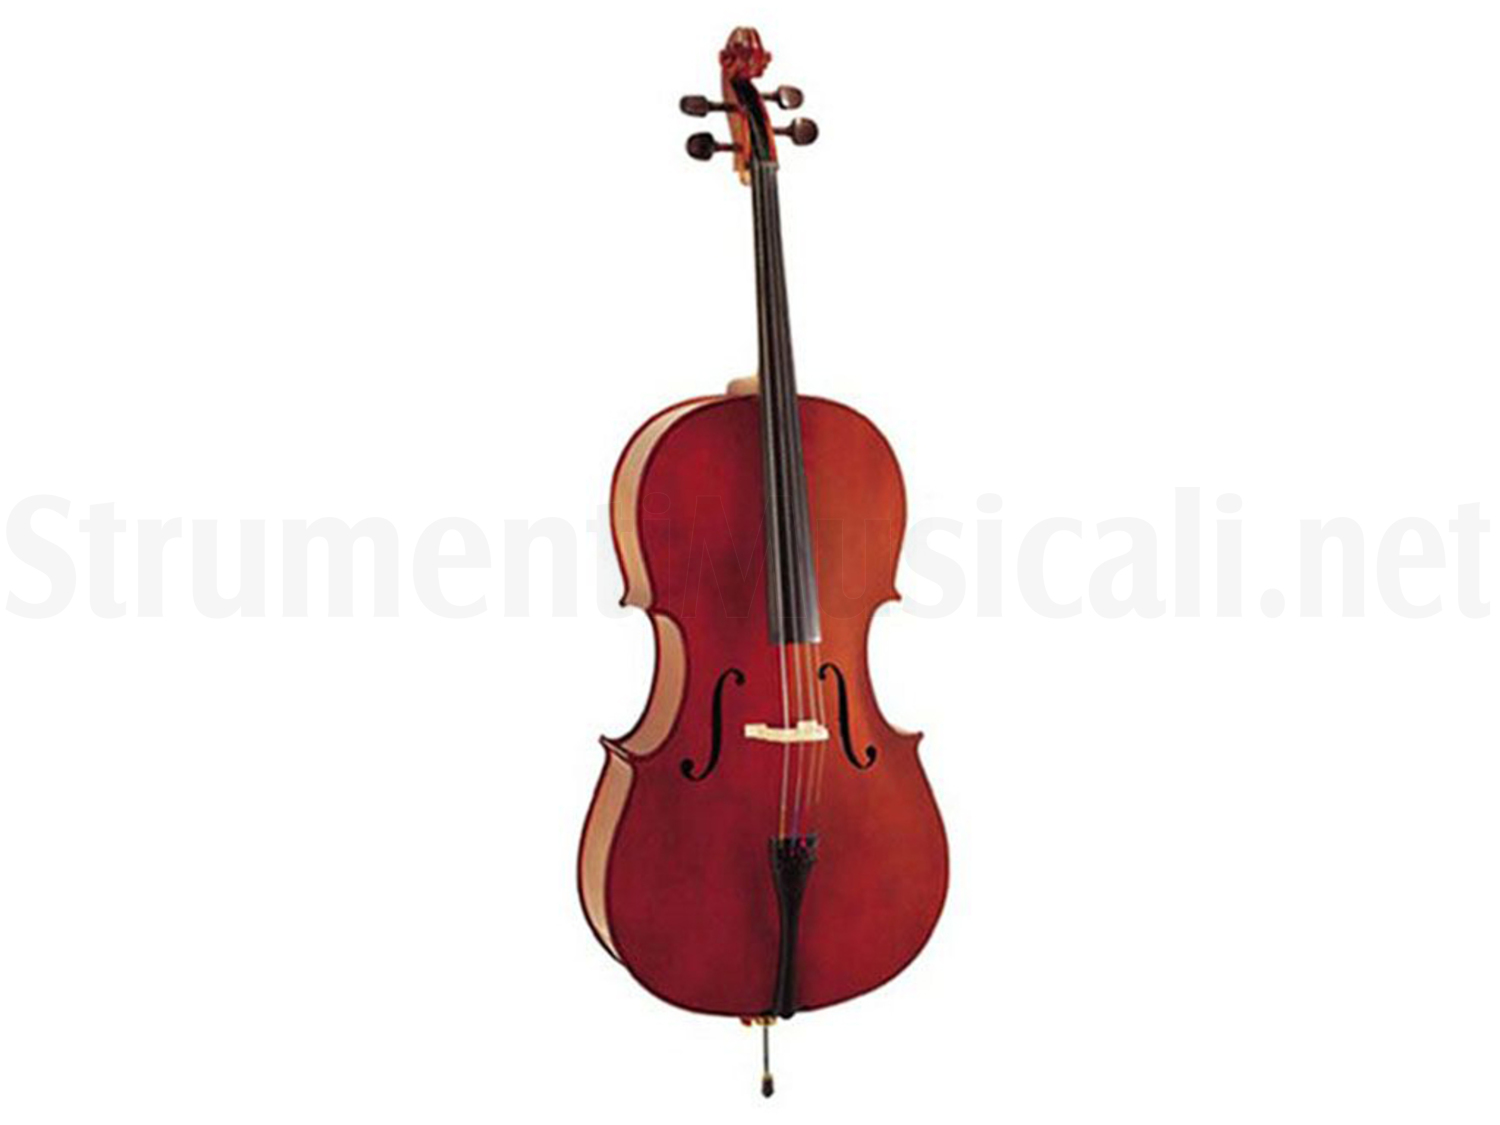 30 mm flap  Fotografie 15,2 x 10,2 cm autosigillanti   violoncello misura 108 mm x 152 mm  40 micron